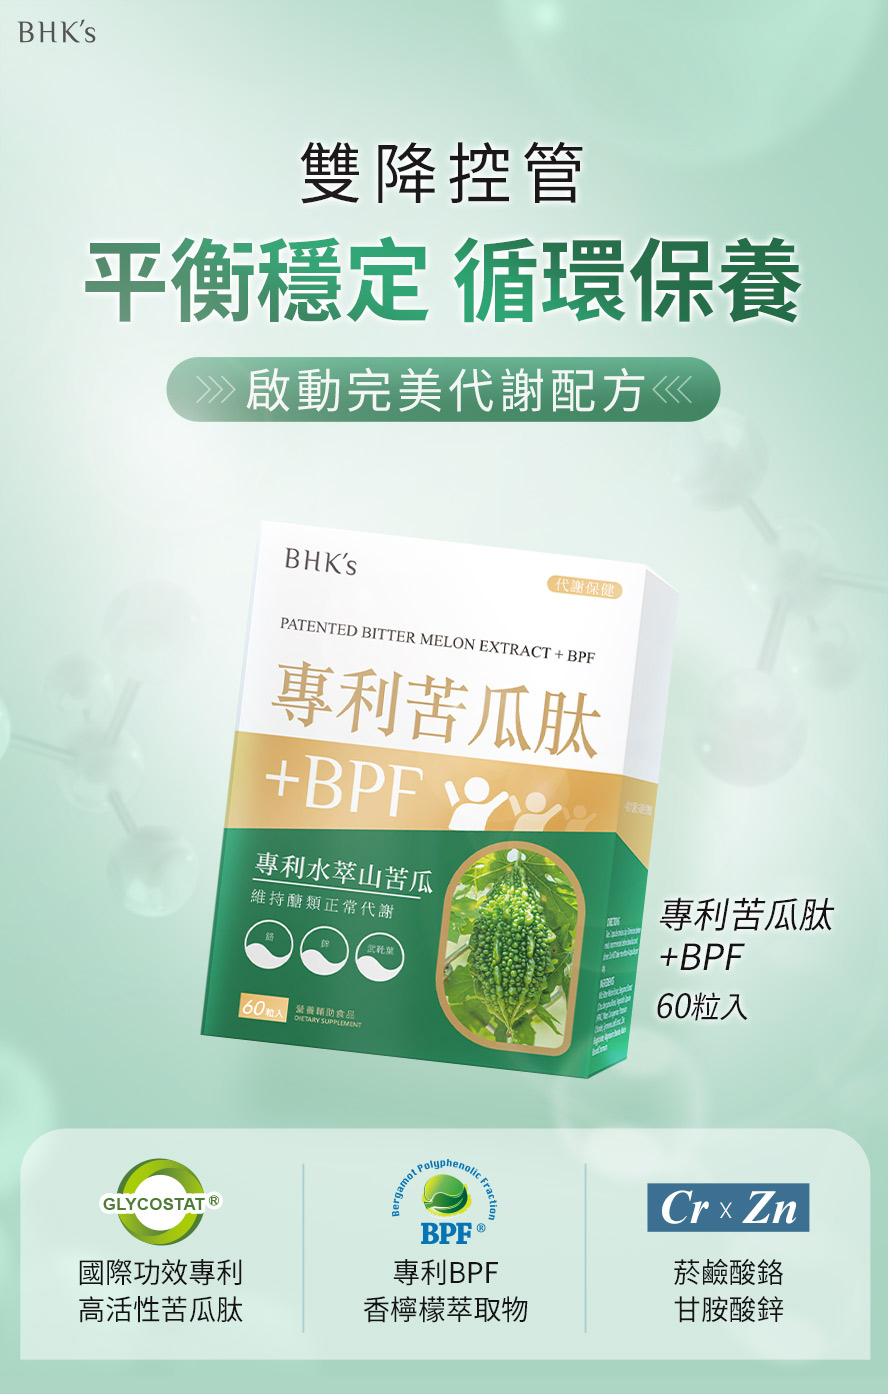 BHK's專利苦瓜肽+BPF產品介紹。